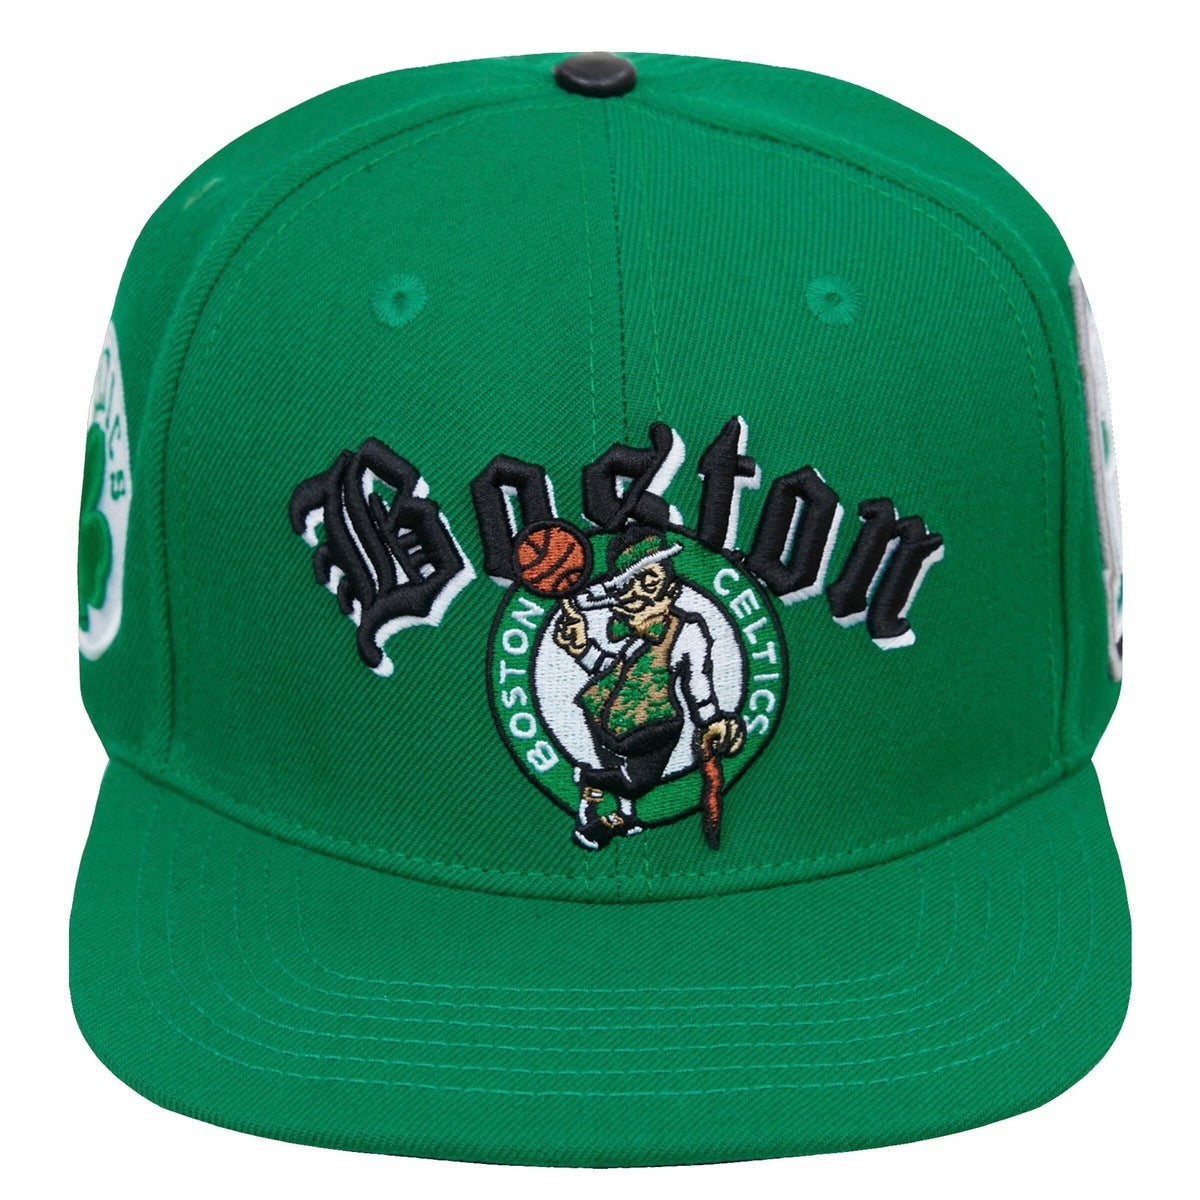 NBA BOSTON CELTICS OLD ENGLISH WOOL UNISEX SNAPBACK HAT (KELLY GREEN)